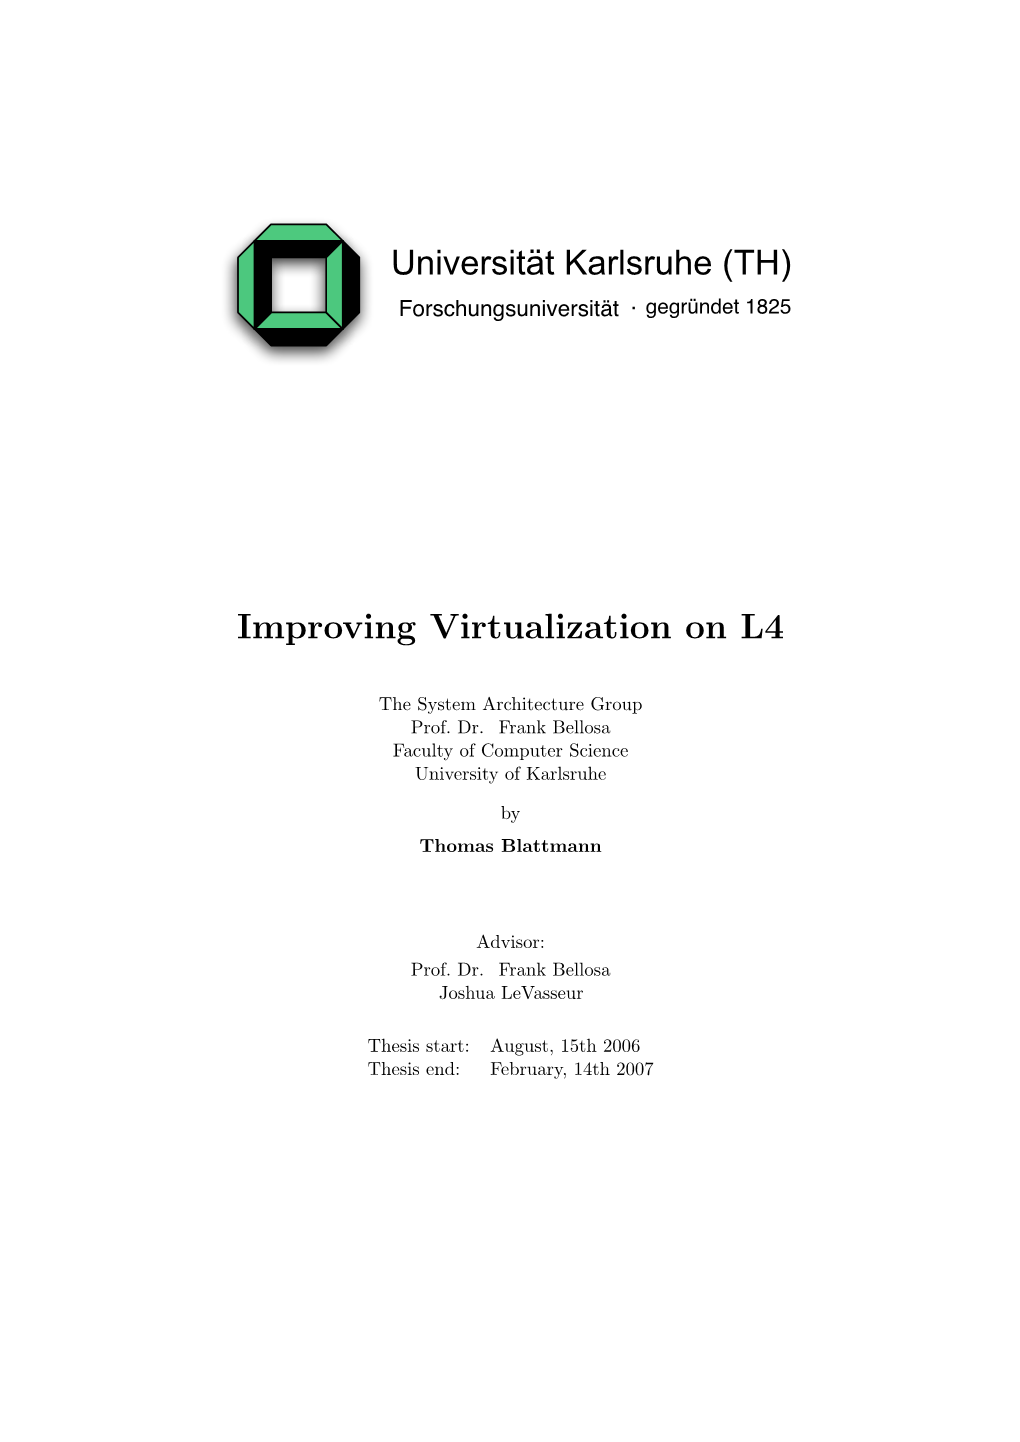 Improving Virtualization on L4